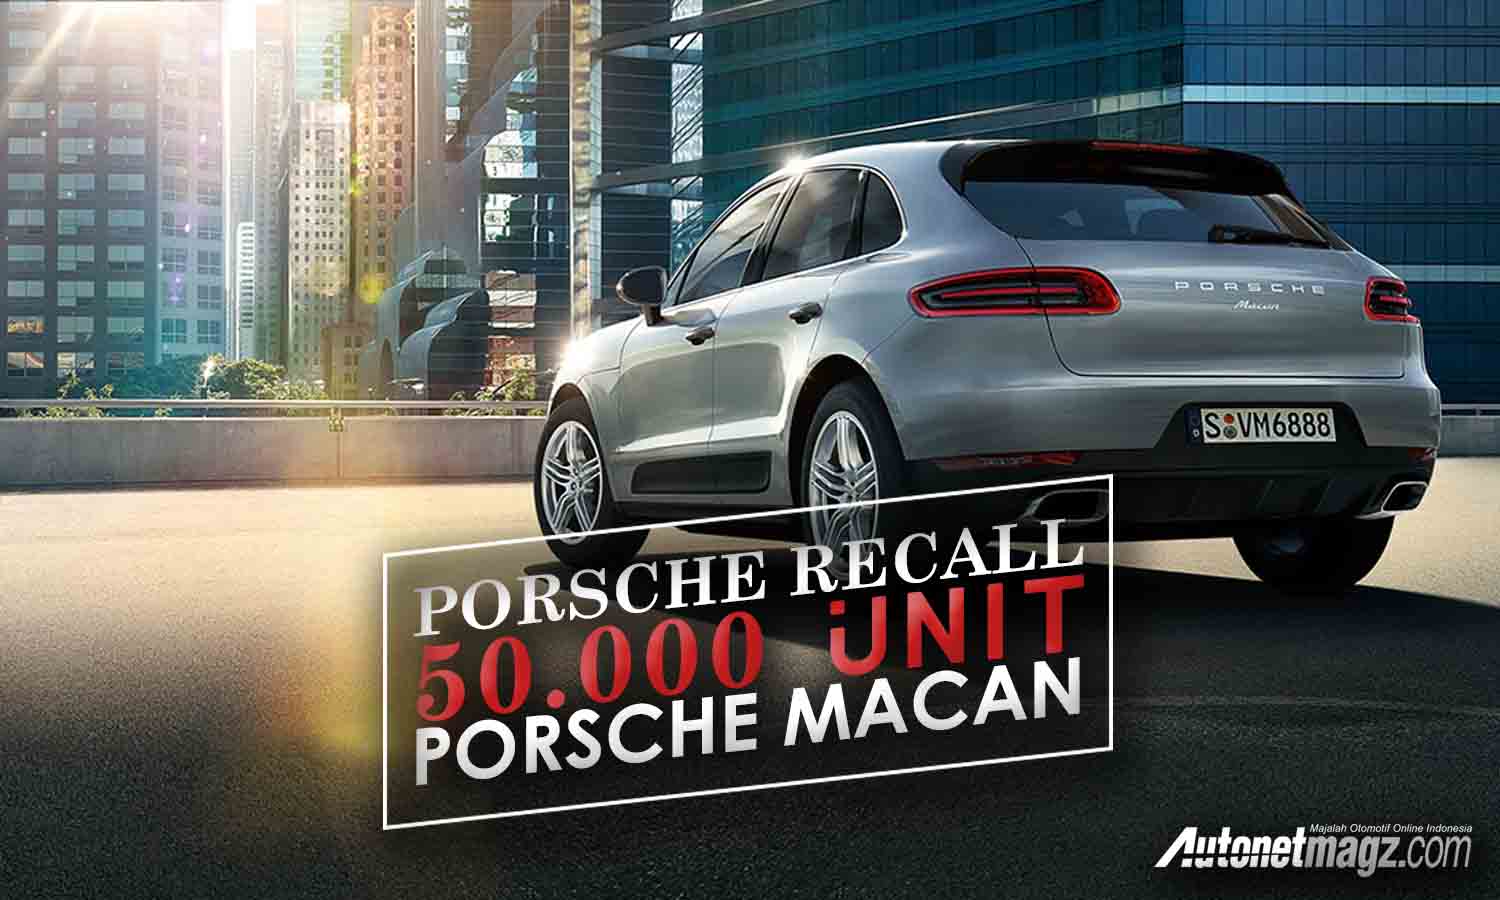 Berita, porsche recall 50000 unit macan di amerika: Porsche Recall 50.000 unit Porsche Macan di Amerika